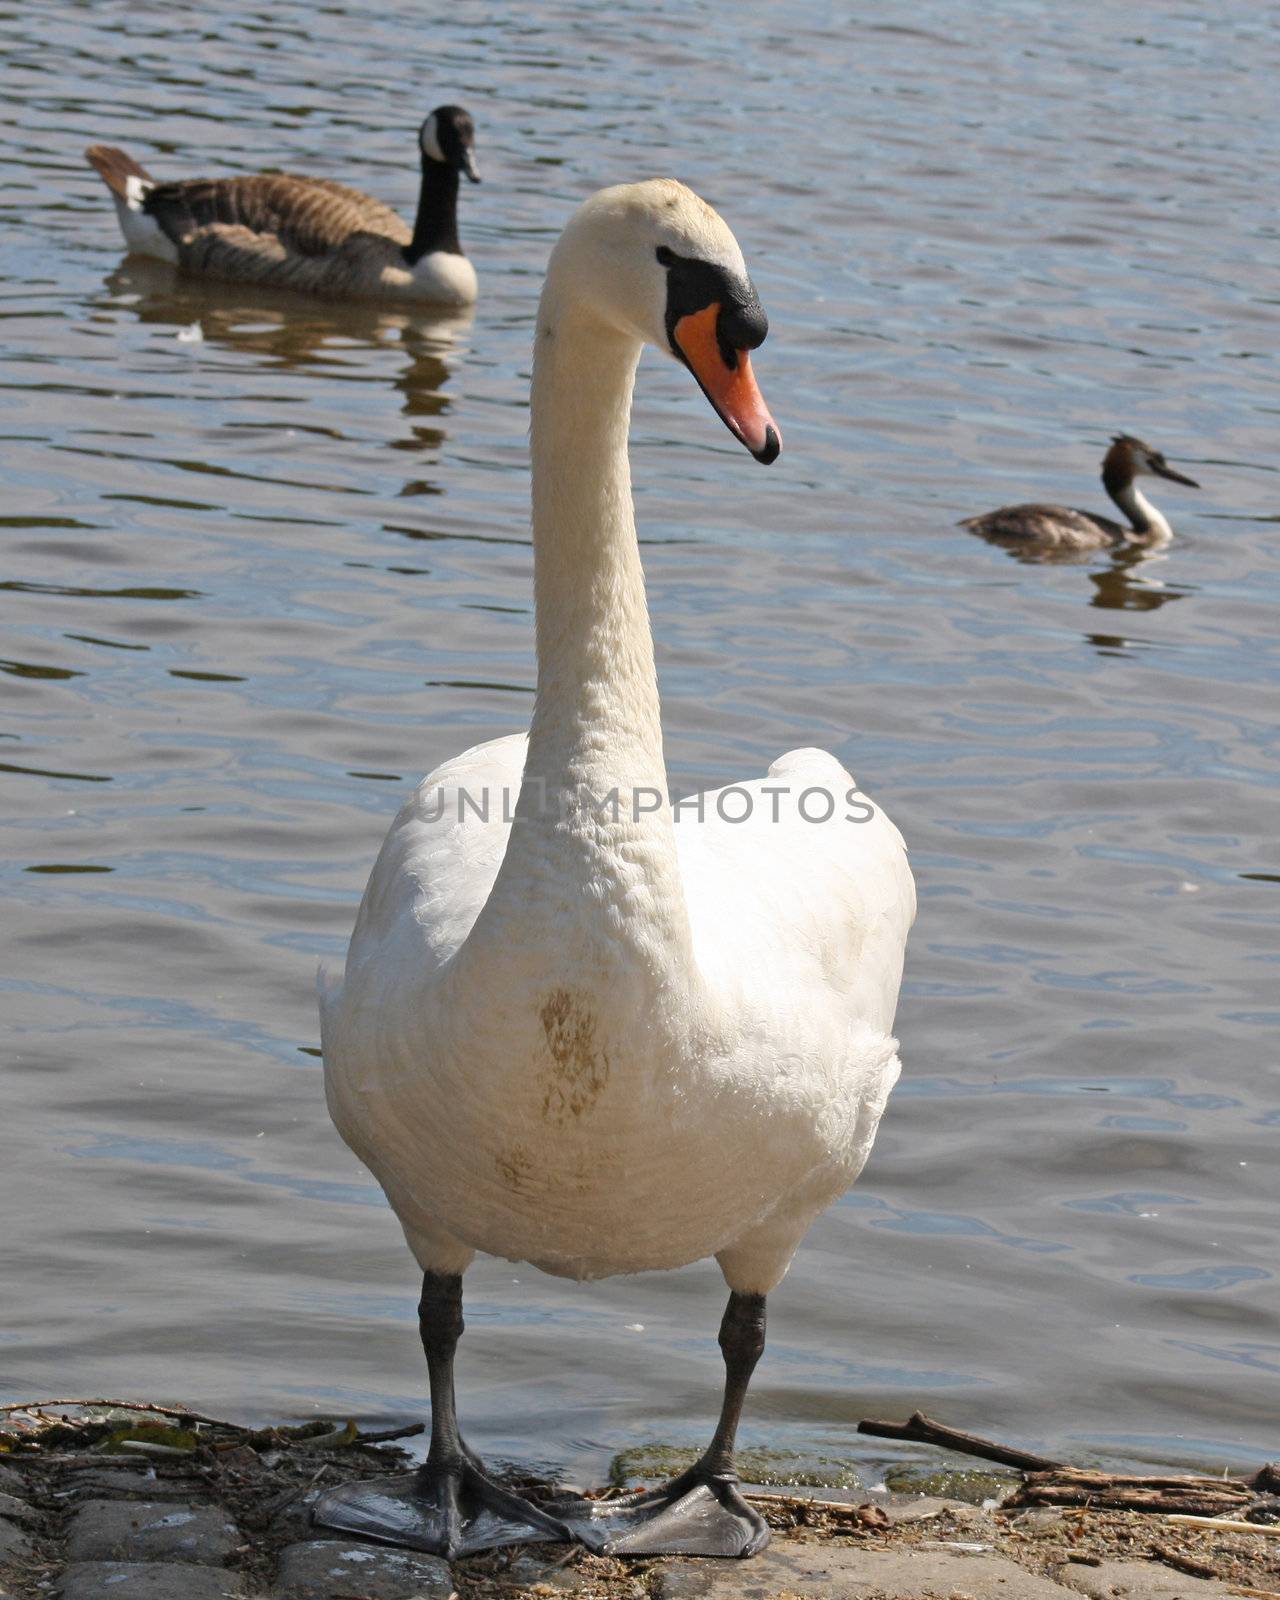 a beautiful swan standing